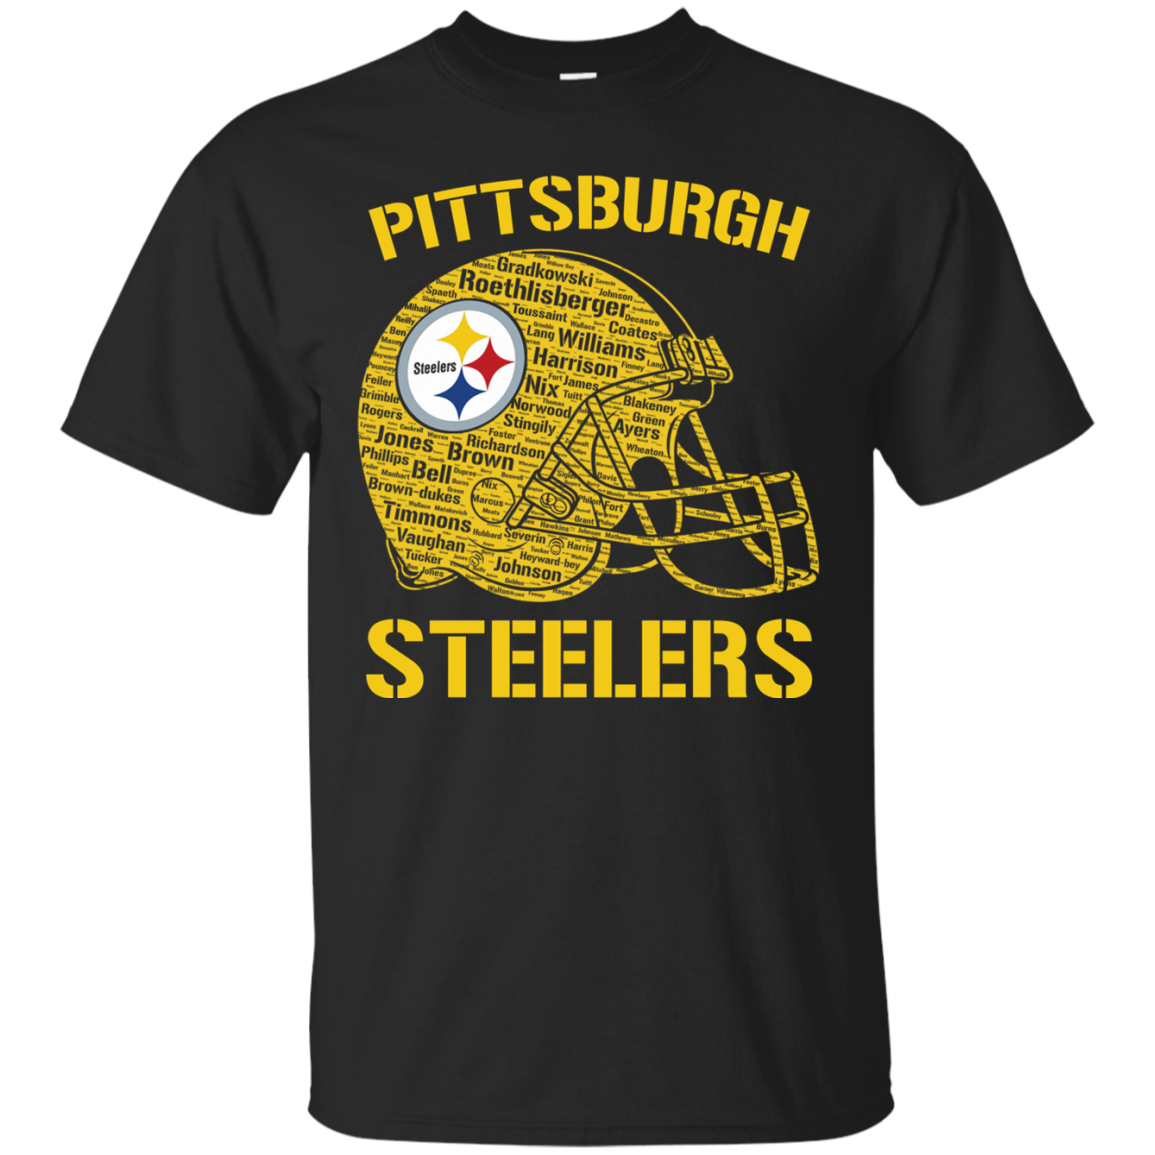 Pittsburgh Steelers Shirts The Logo - Teesmiley